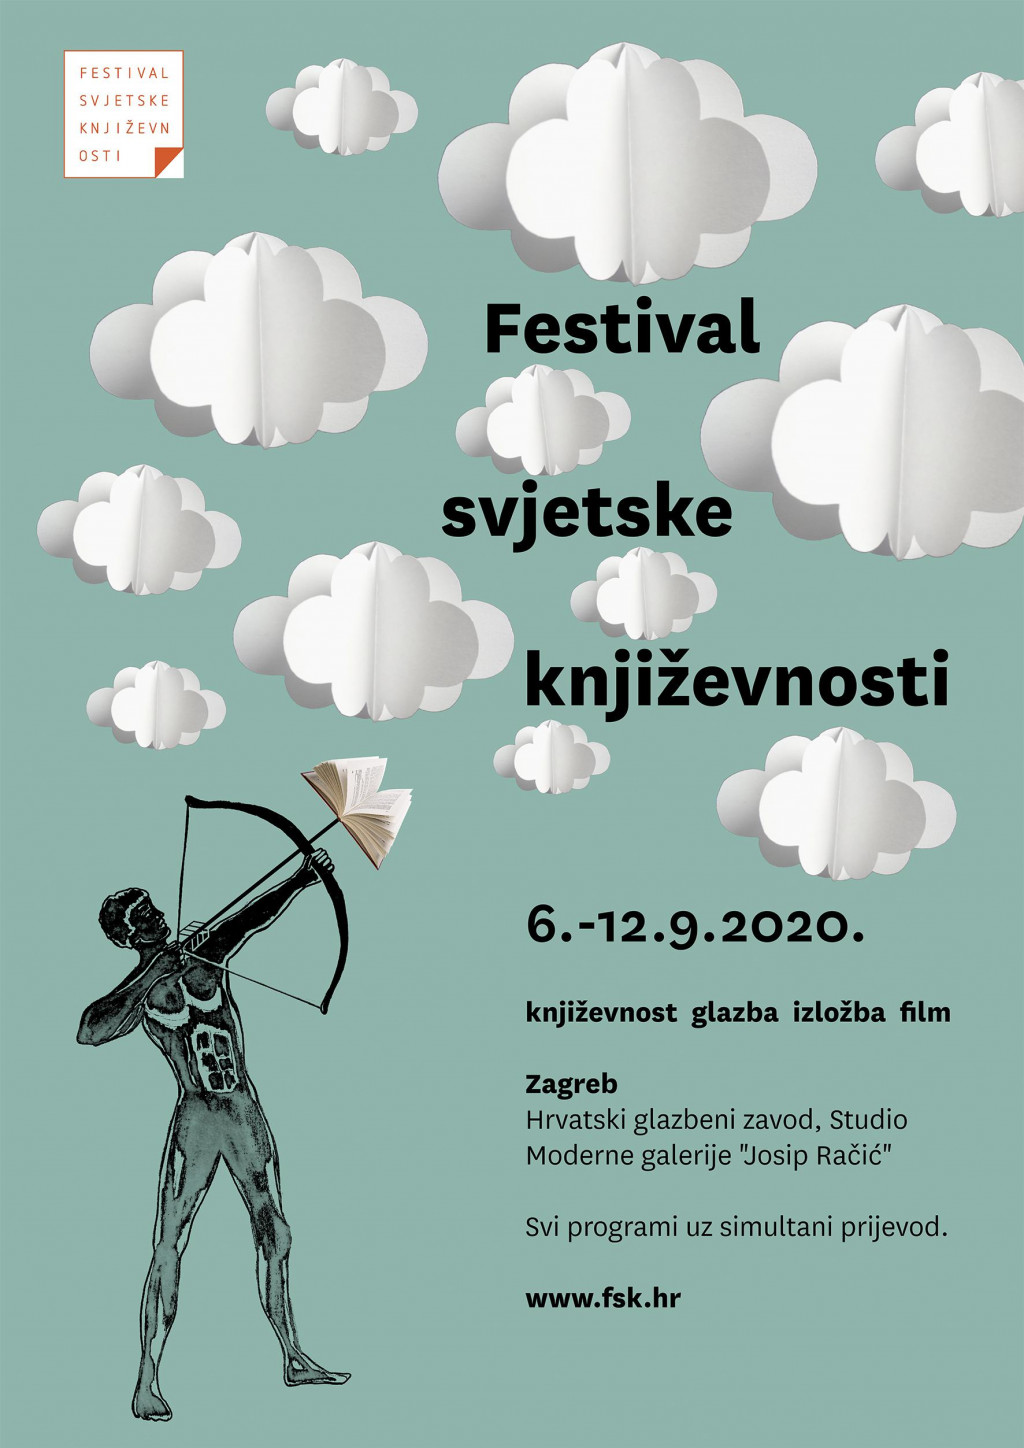 Mihael Kolarić, prva nagrada žirija za plakat osmoga Festivala svjetske književnosti